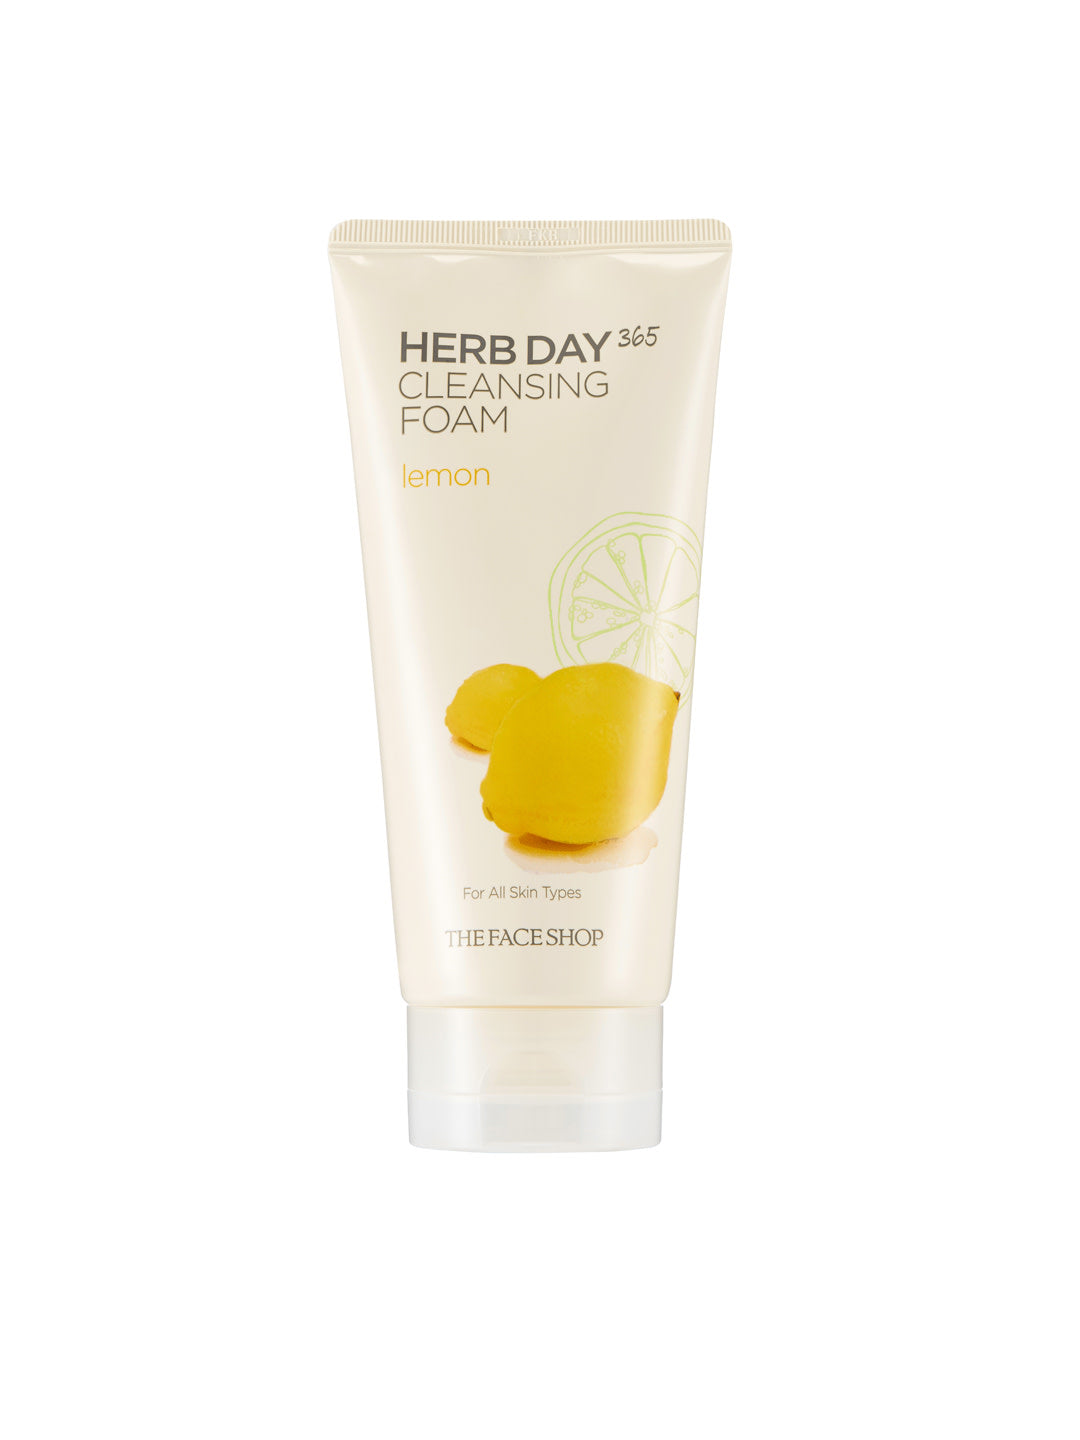 THE FACESHOP Herb Day 365 Cleansing Foam Lemon - Misumi Cosmetics Nepal